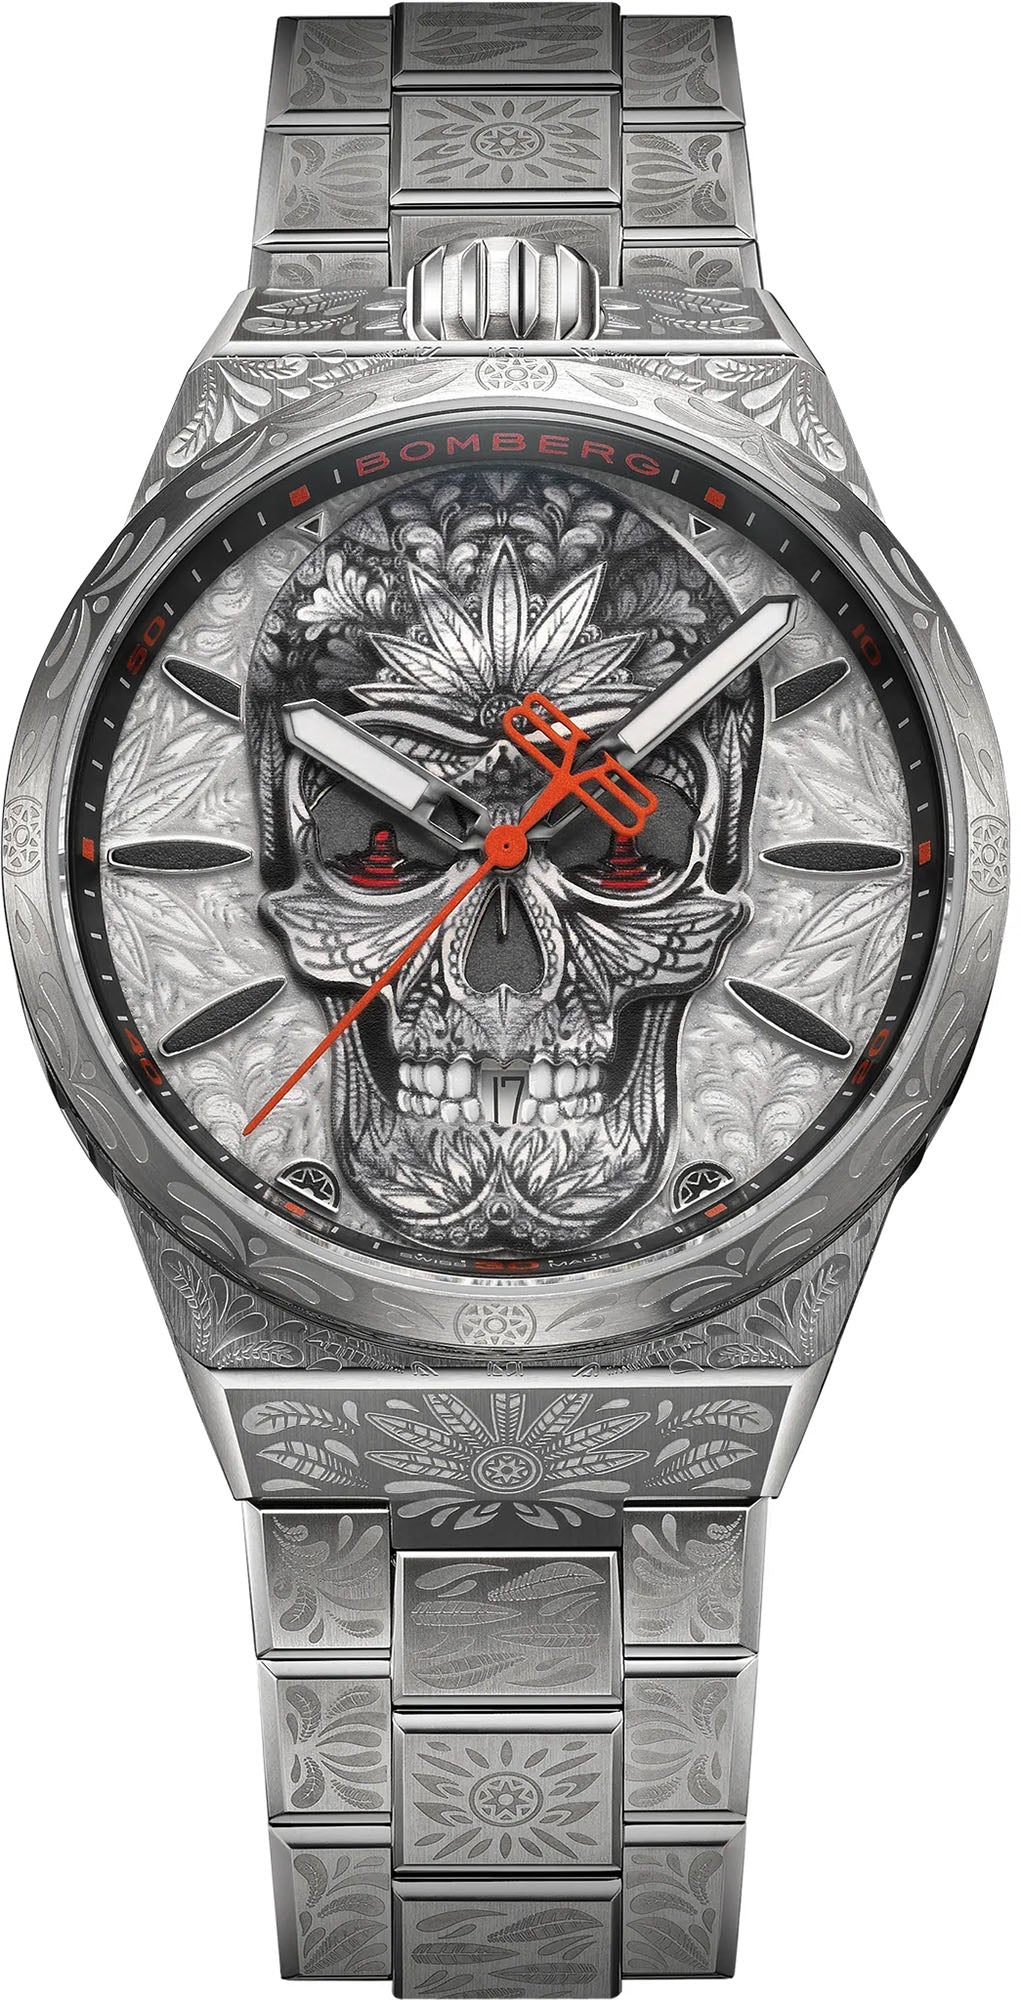 Photos - Wrist Watch BOMBERG Watch Bolt-68 Neo Tattooed Skull Limited Edition - Grey BMB-035 